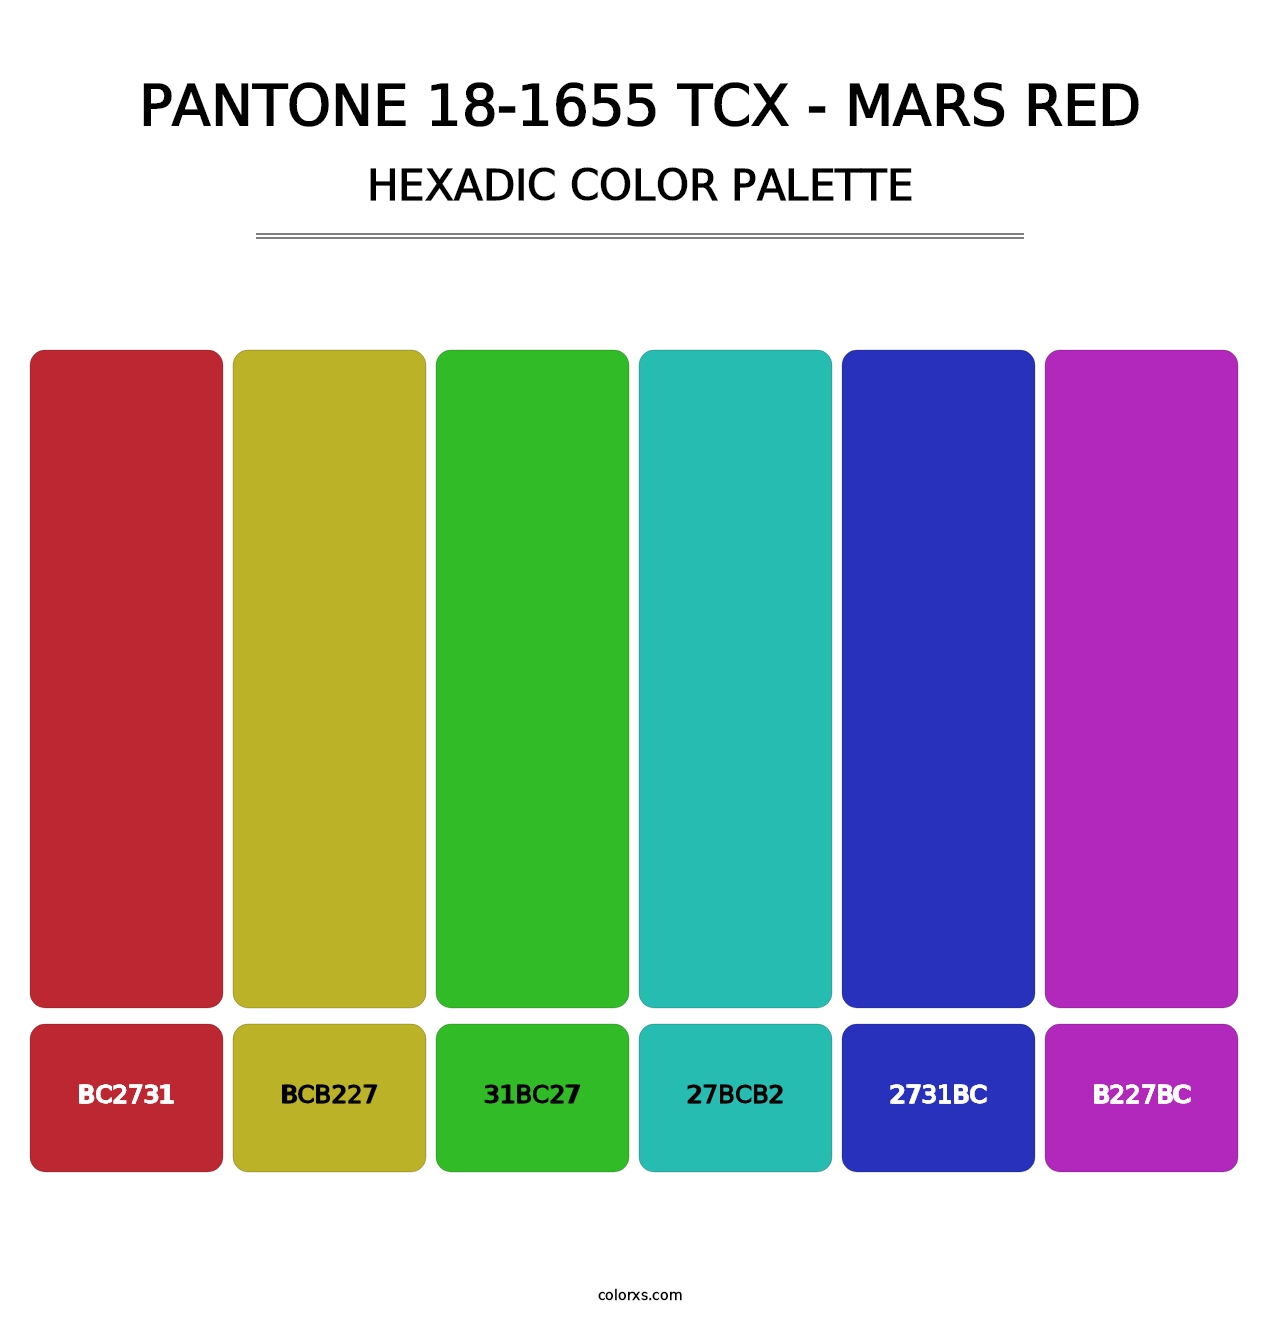 PANTONE 18-1655 TCX - Mars Red - Hexadic Color Palette